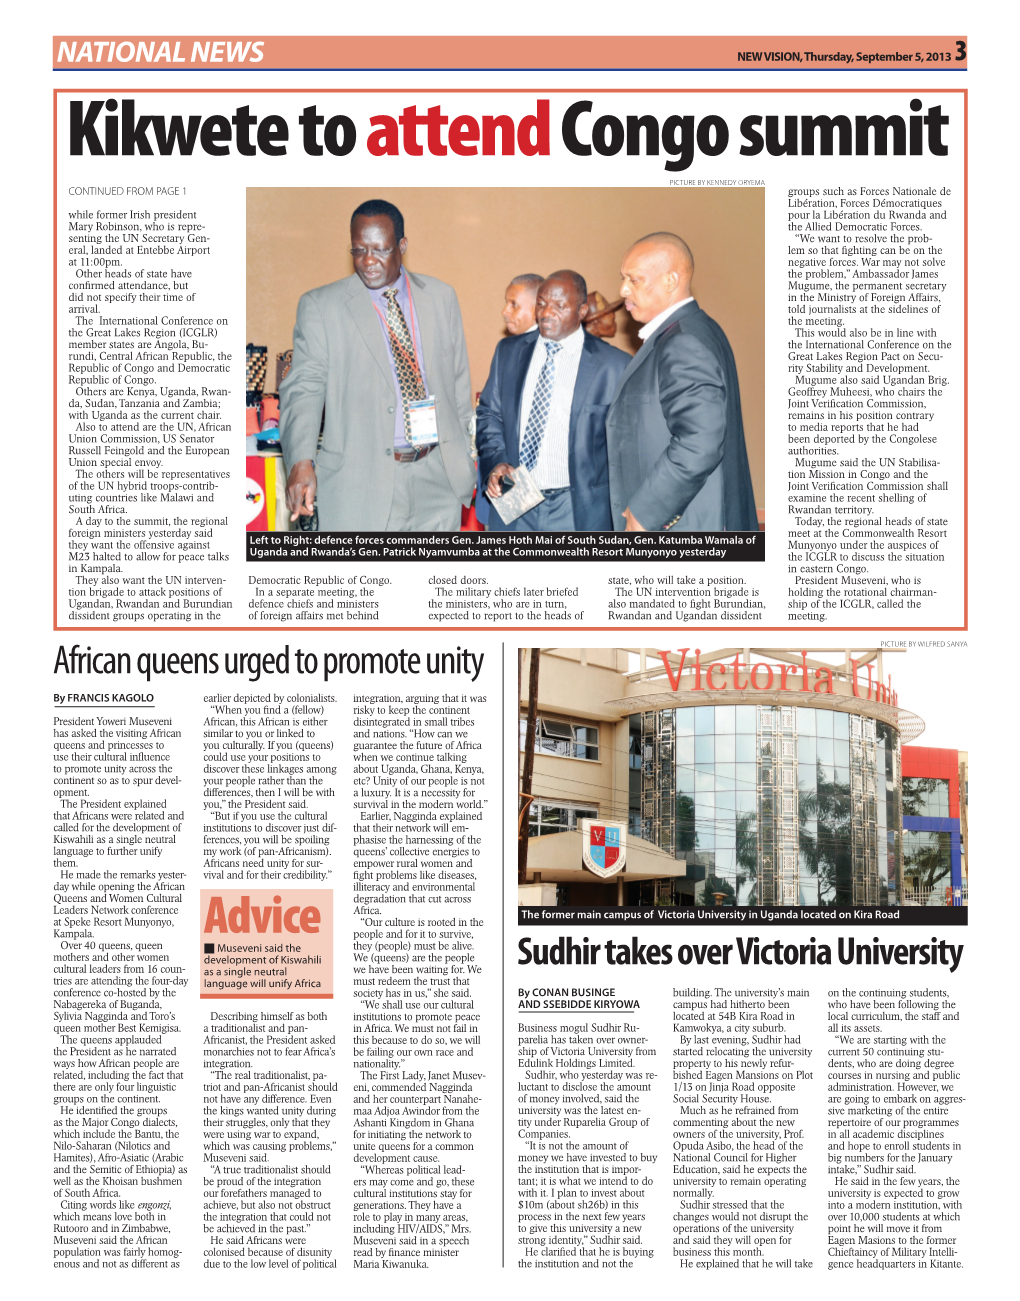 Kikwete to Attend Congo Summit